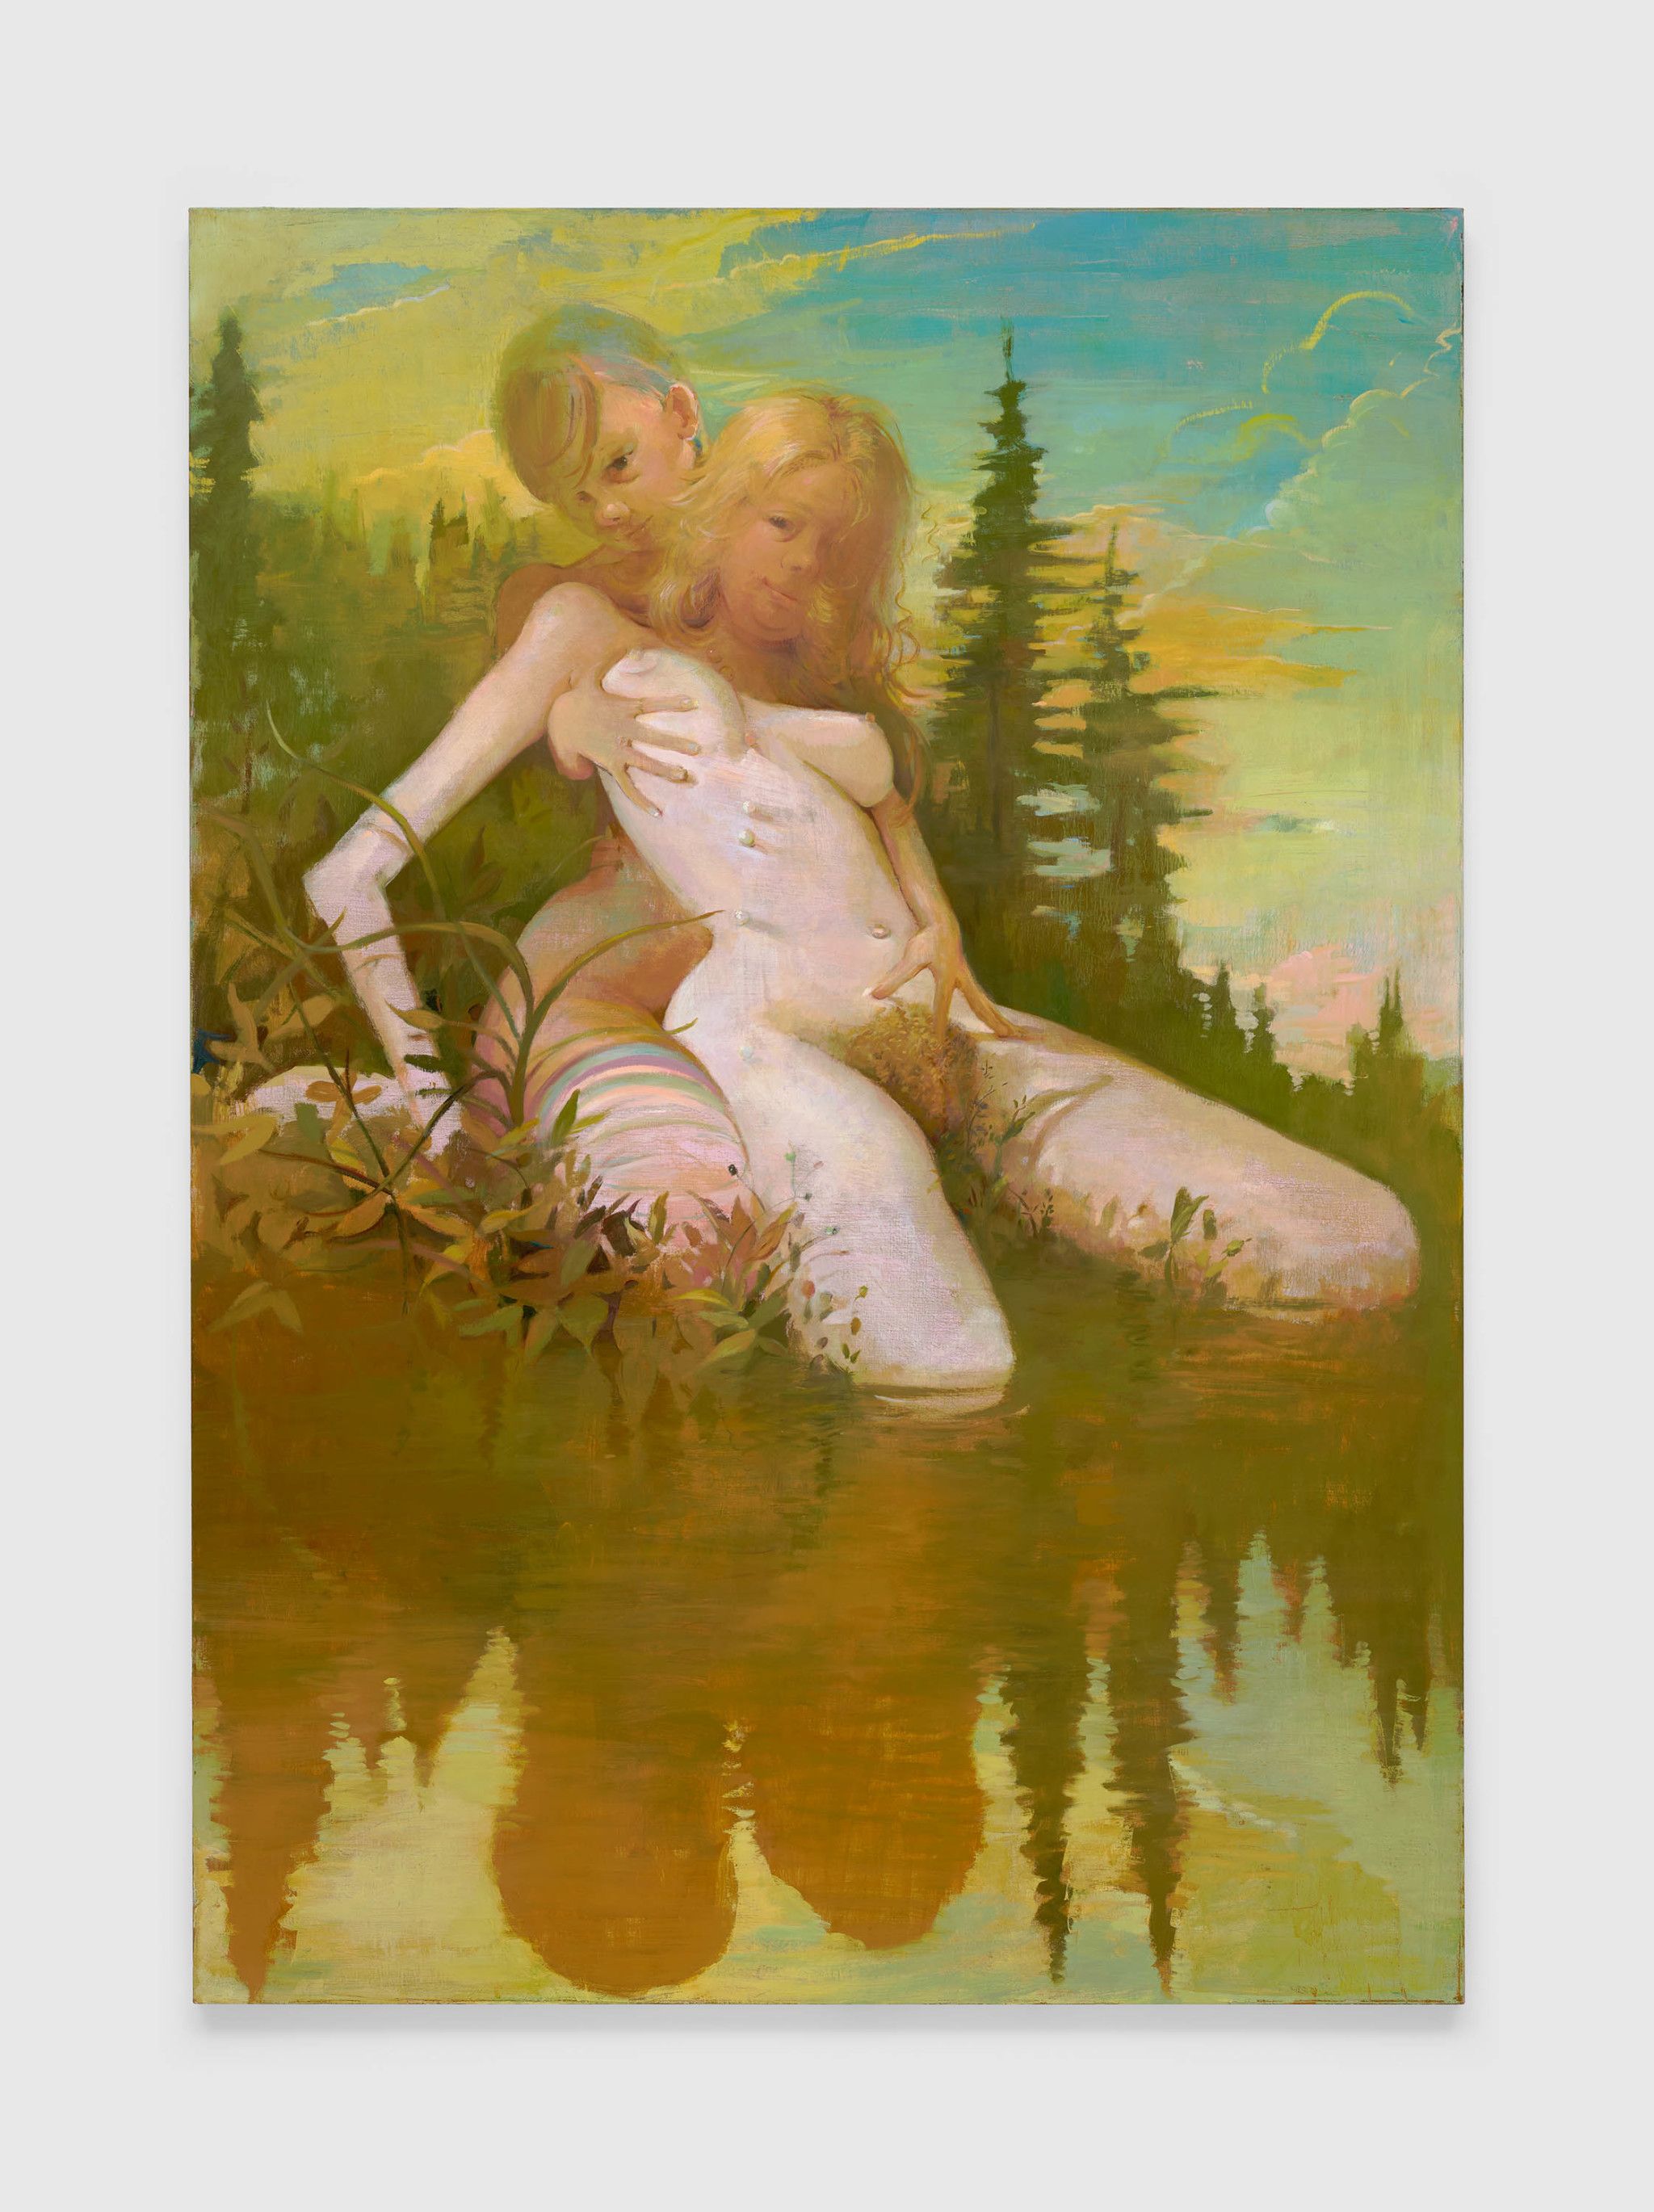 Lisa Yuskavage, Pond, 2007 huile sur lin, 182,9 x 129,5 cm © Lisa Yuskavage, courtesy of the artist and David Zwirner. Photo : DR